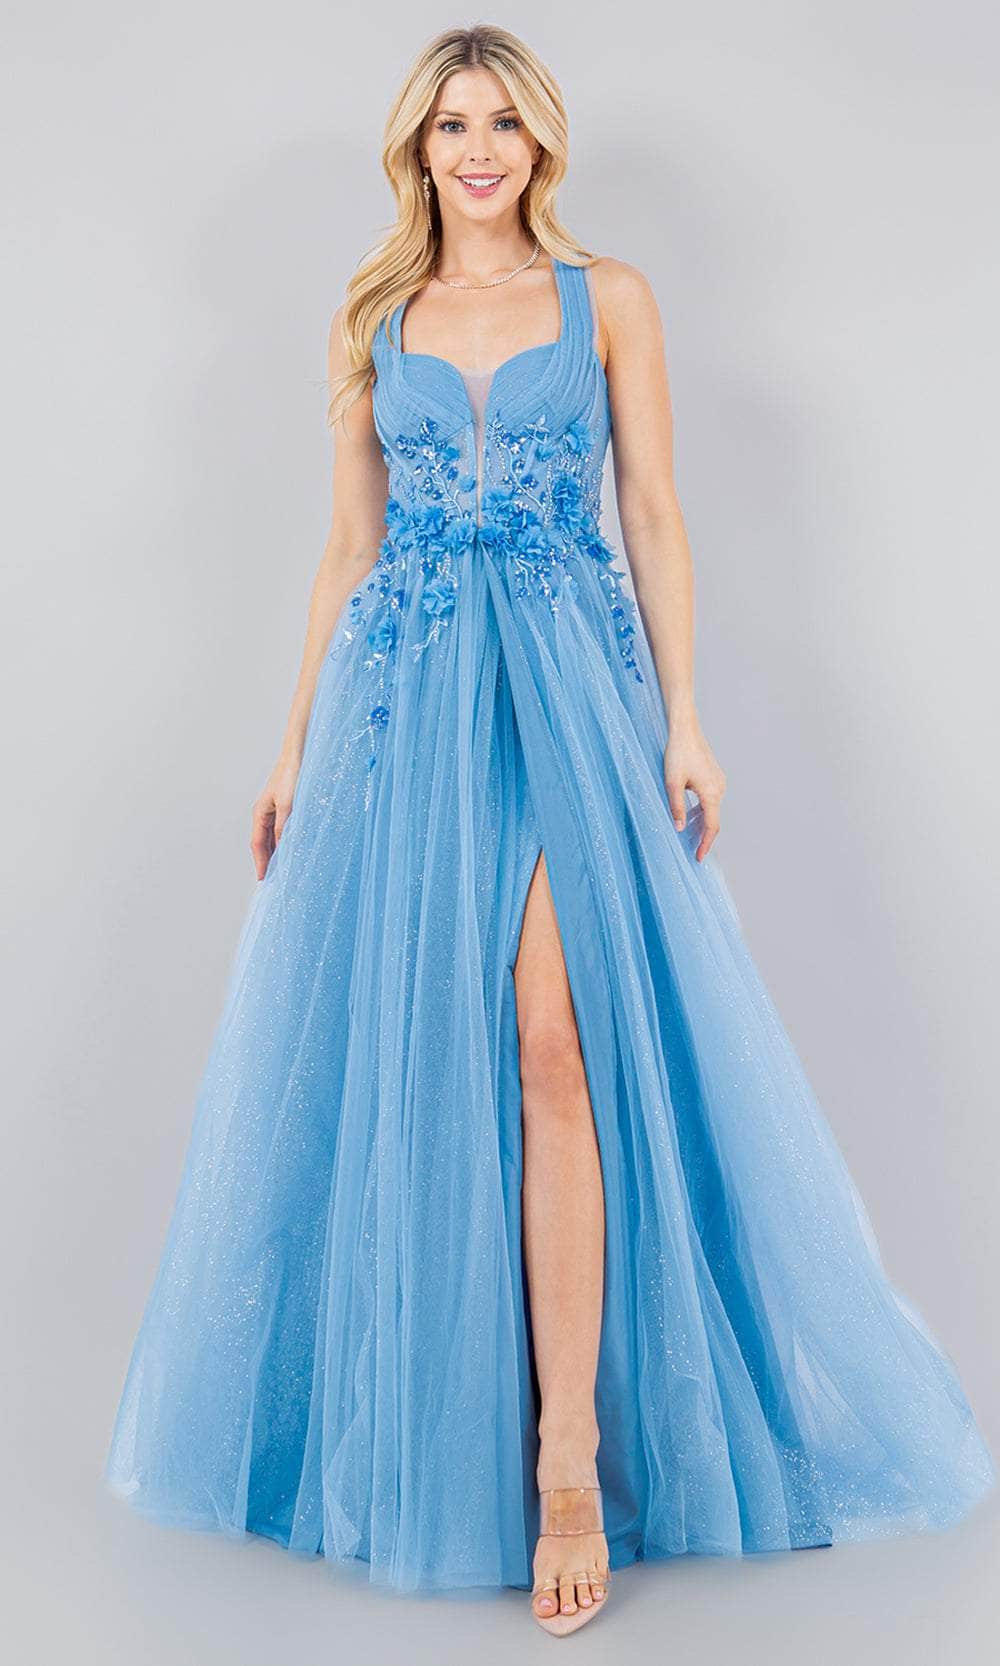 Cinderella Couture 8076J - Sleeveless Halter Neck Prom Dress
